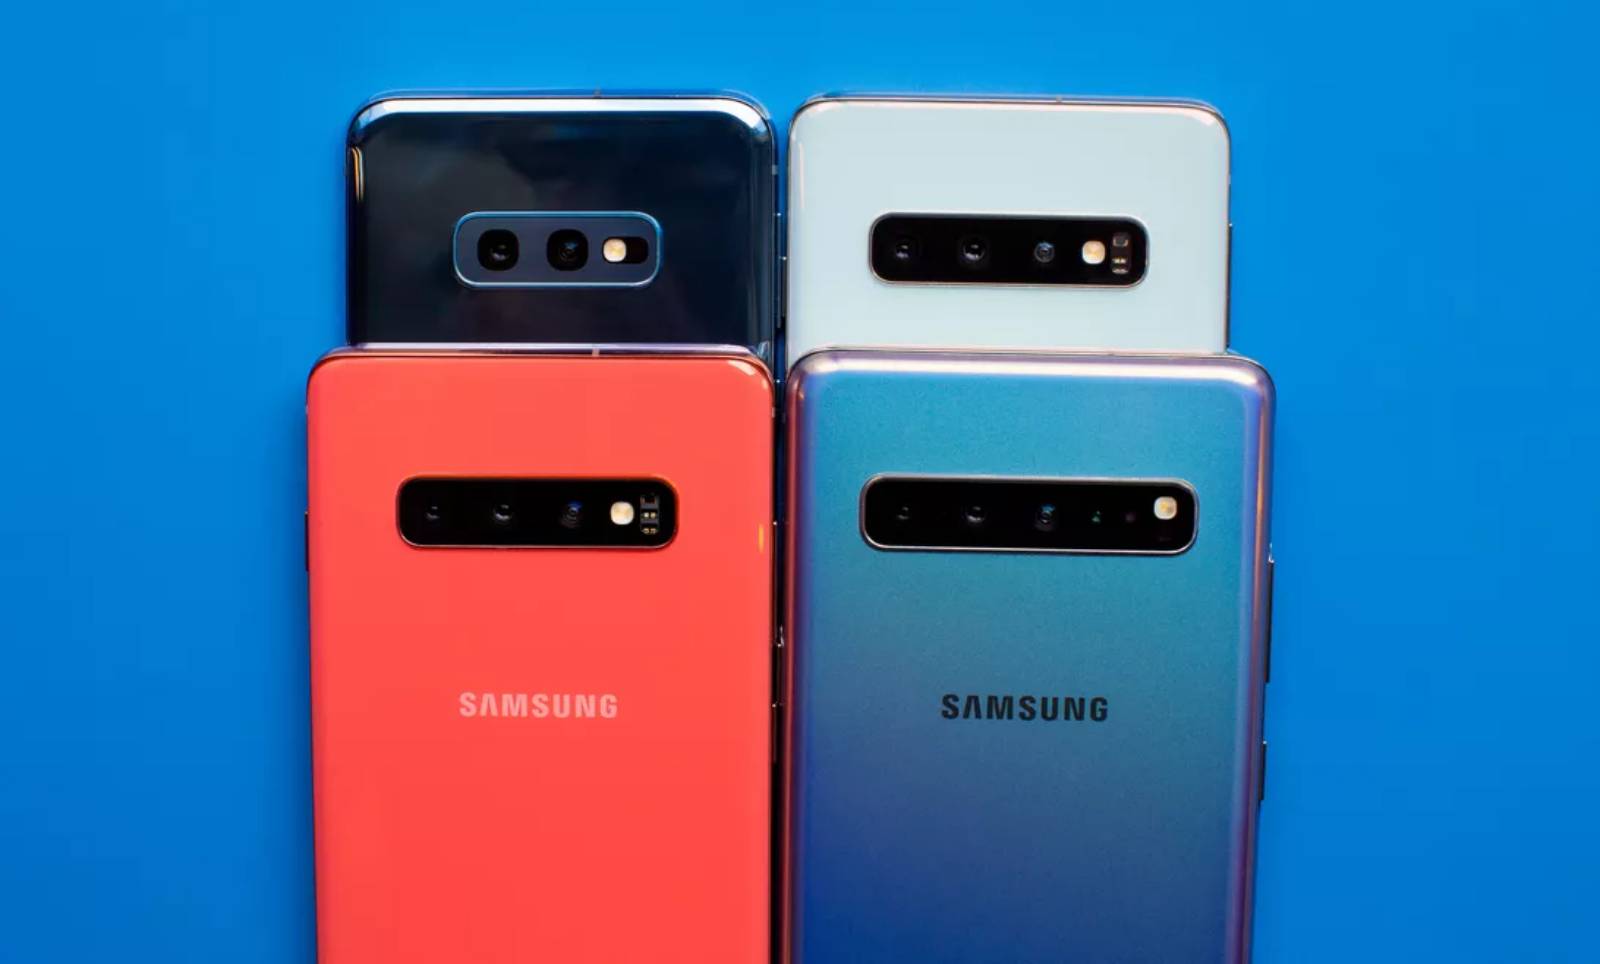 Samsung GALAXY S10 android 10 beta